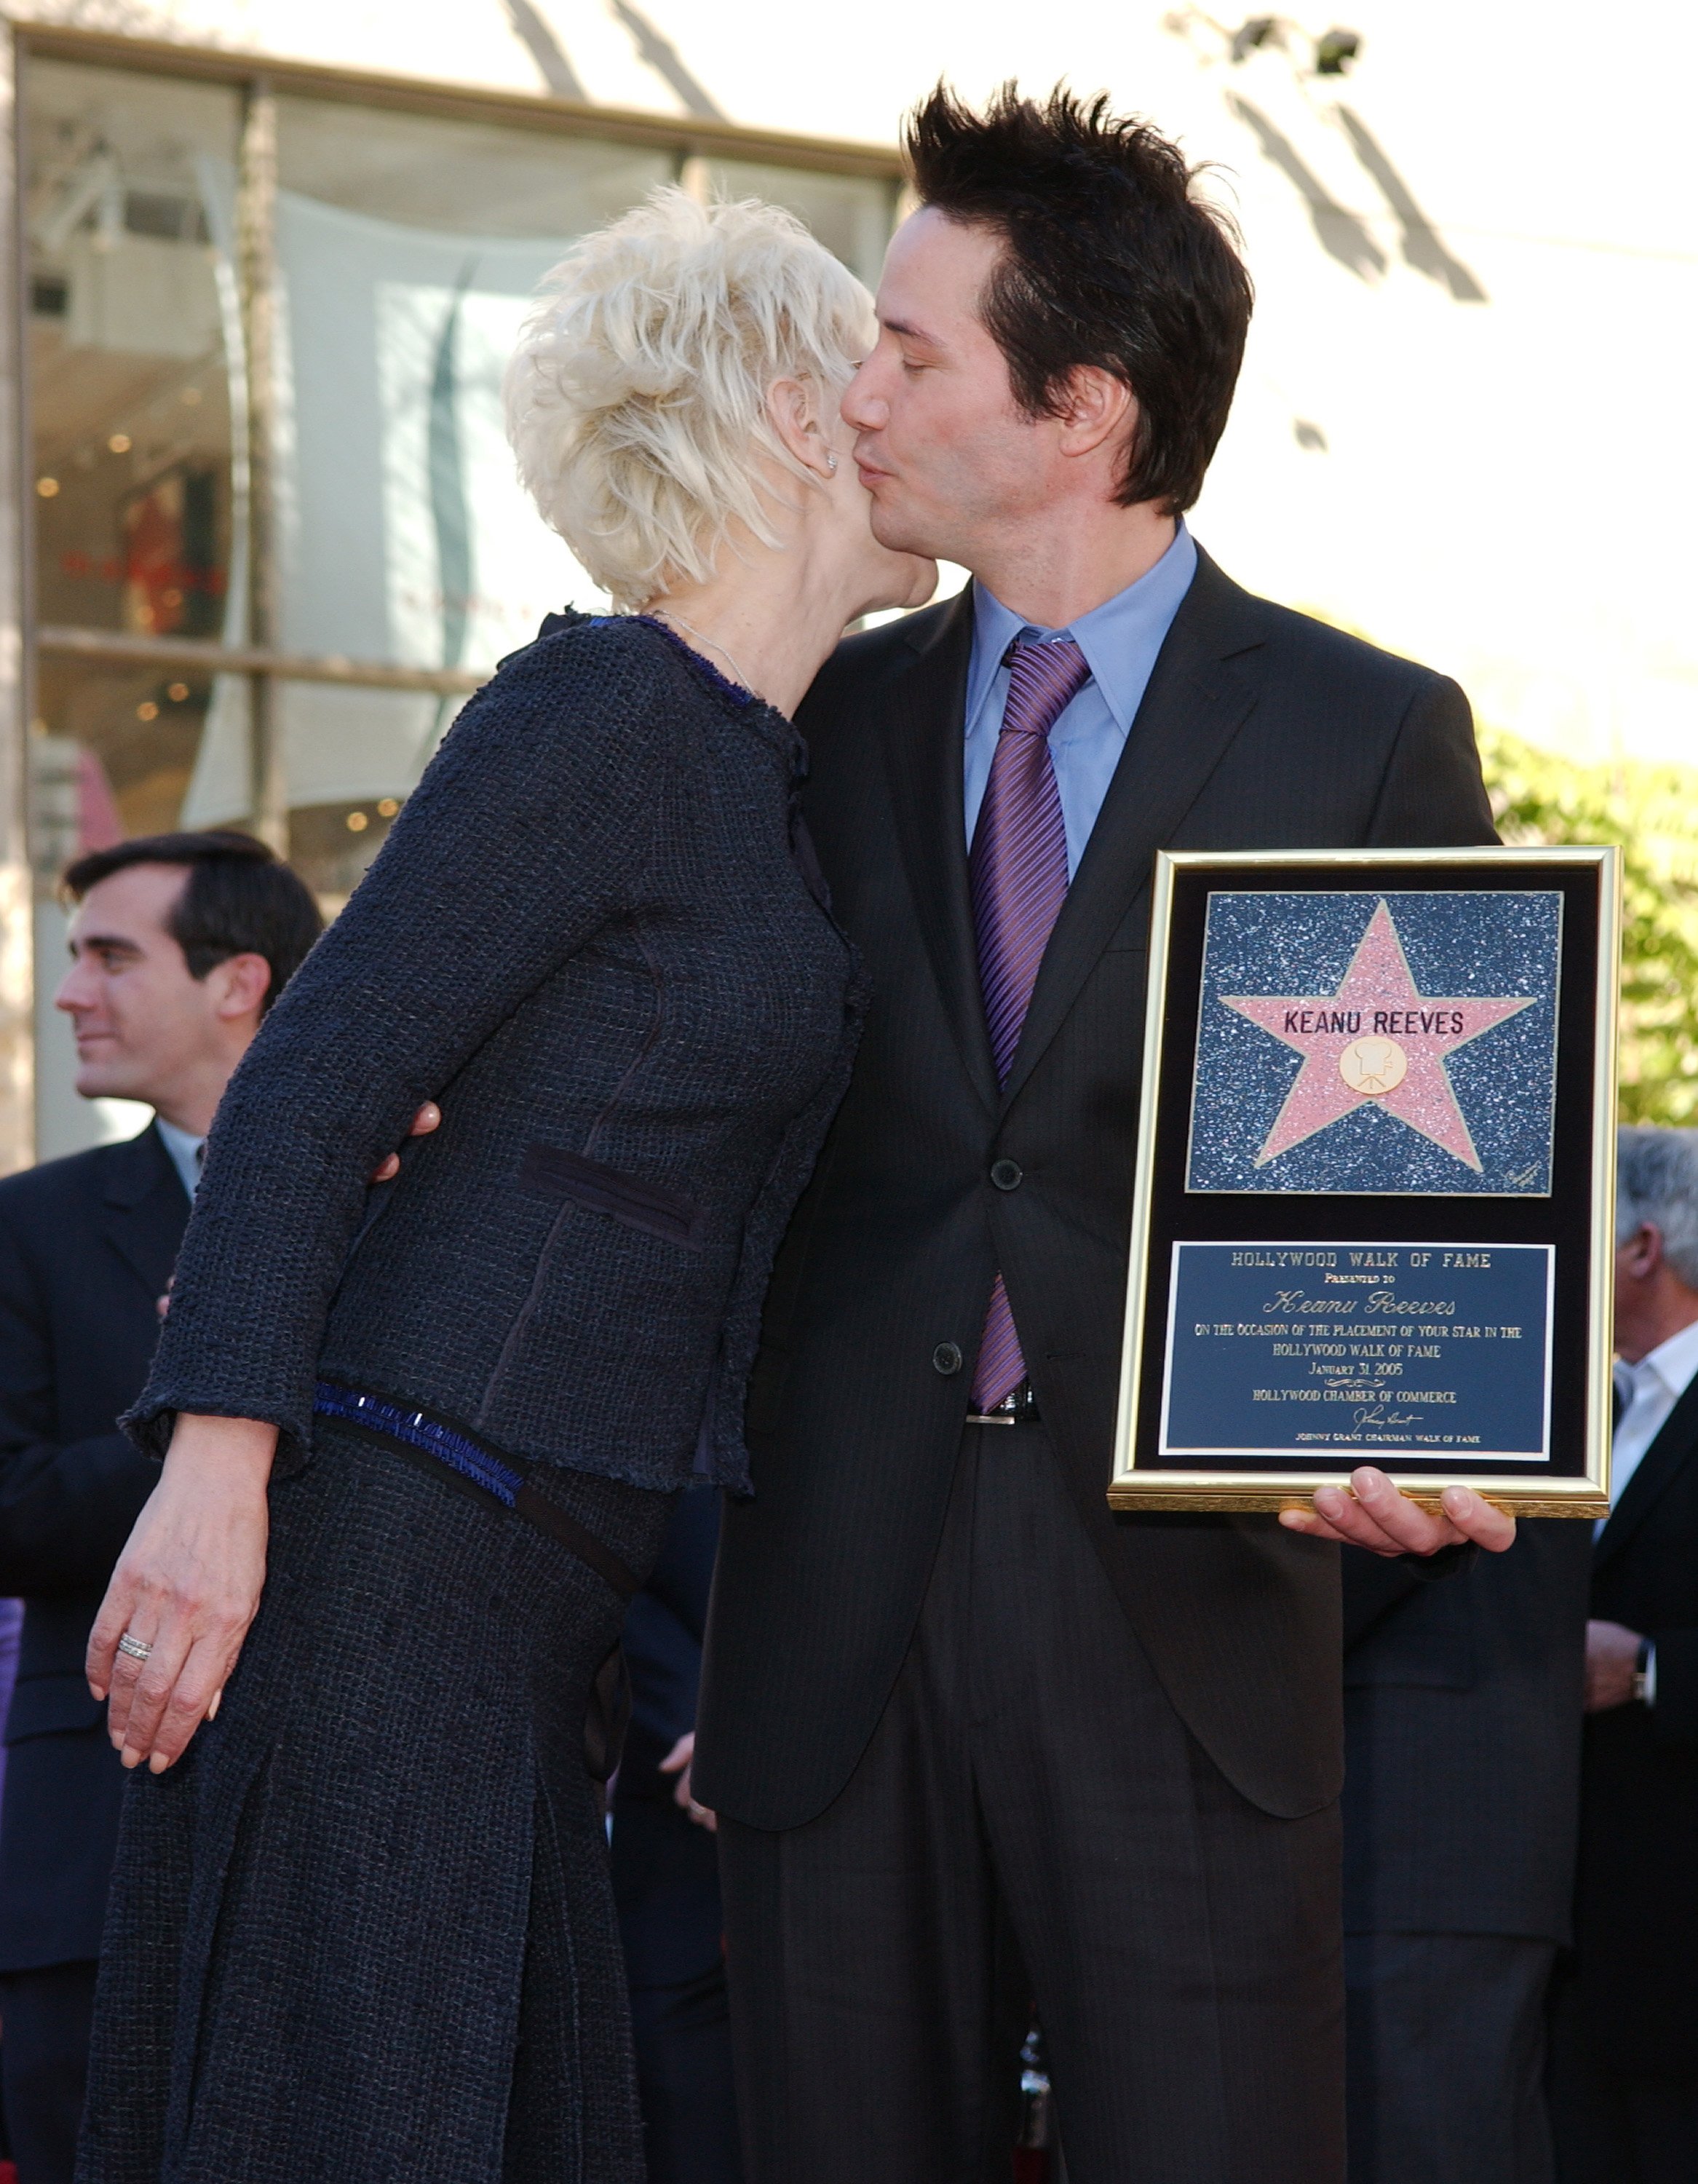 Keanu Reeves' mother kisses him